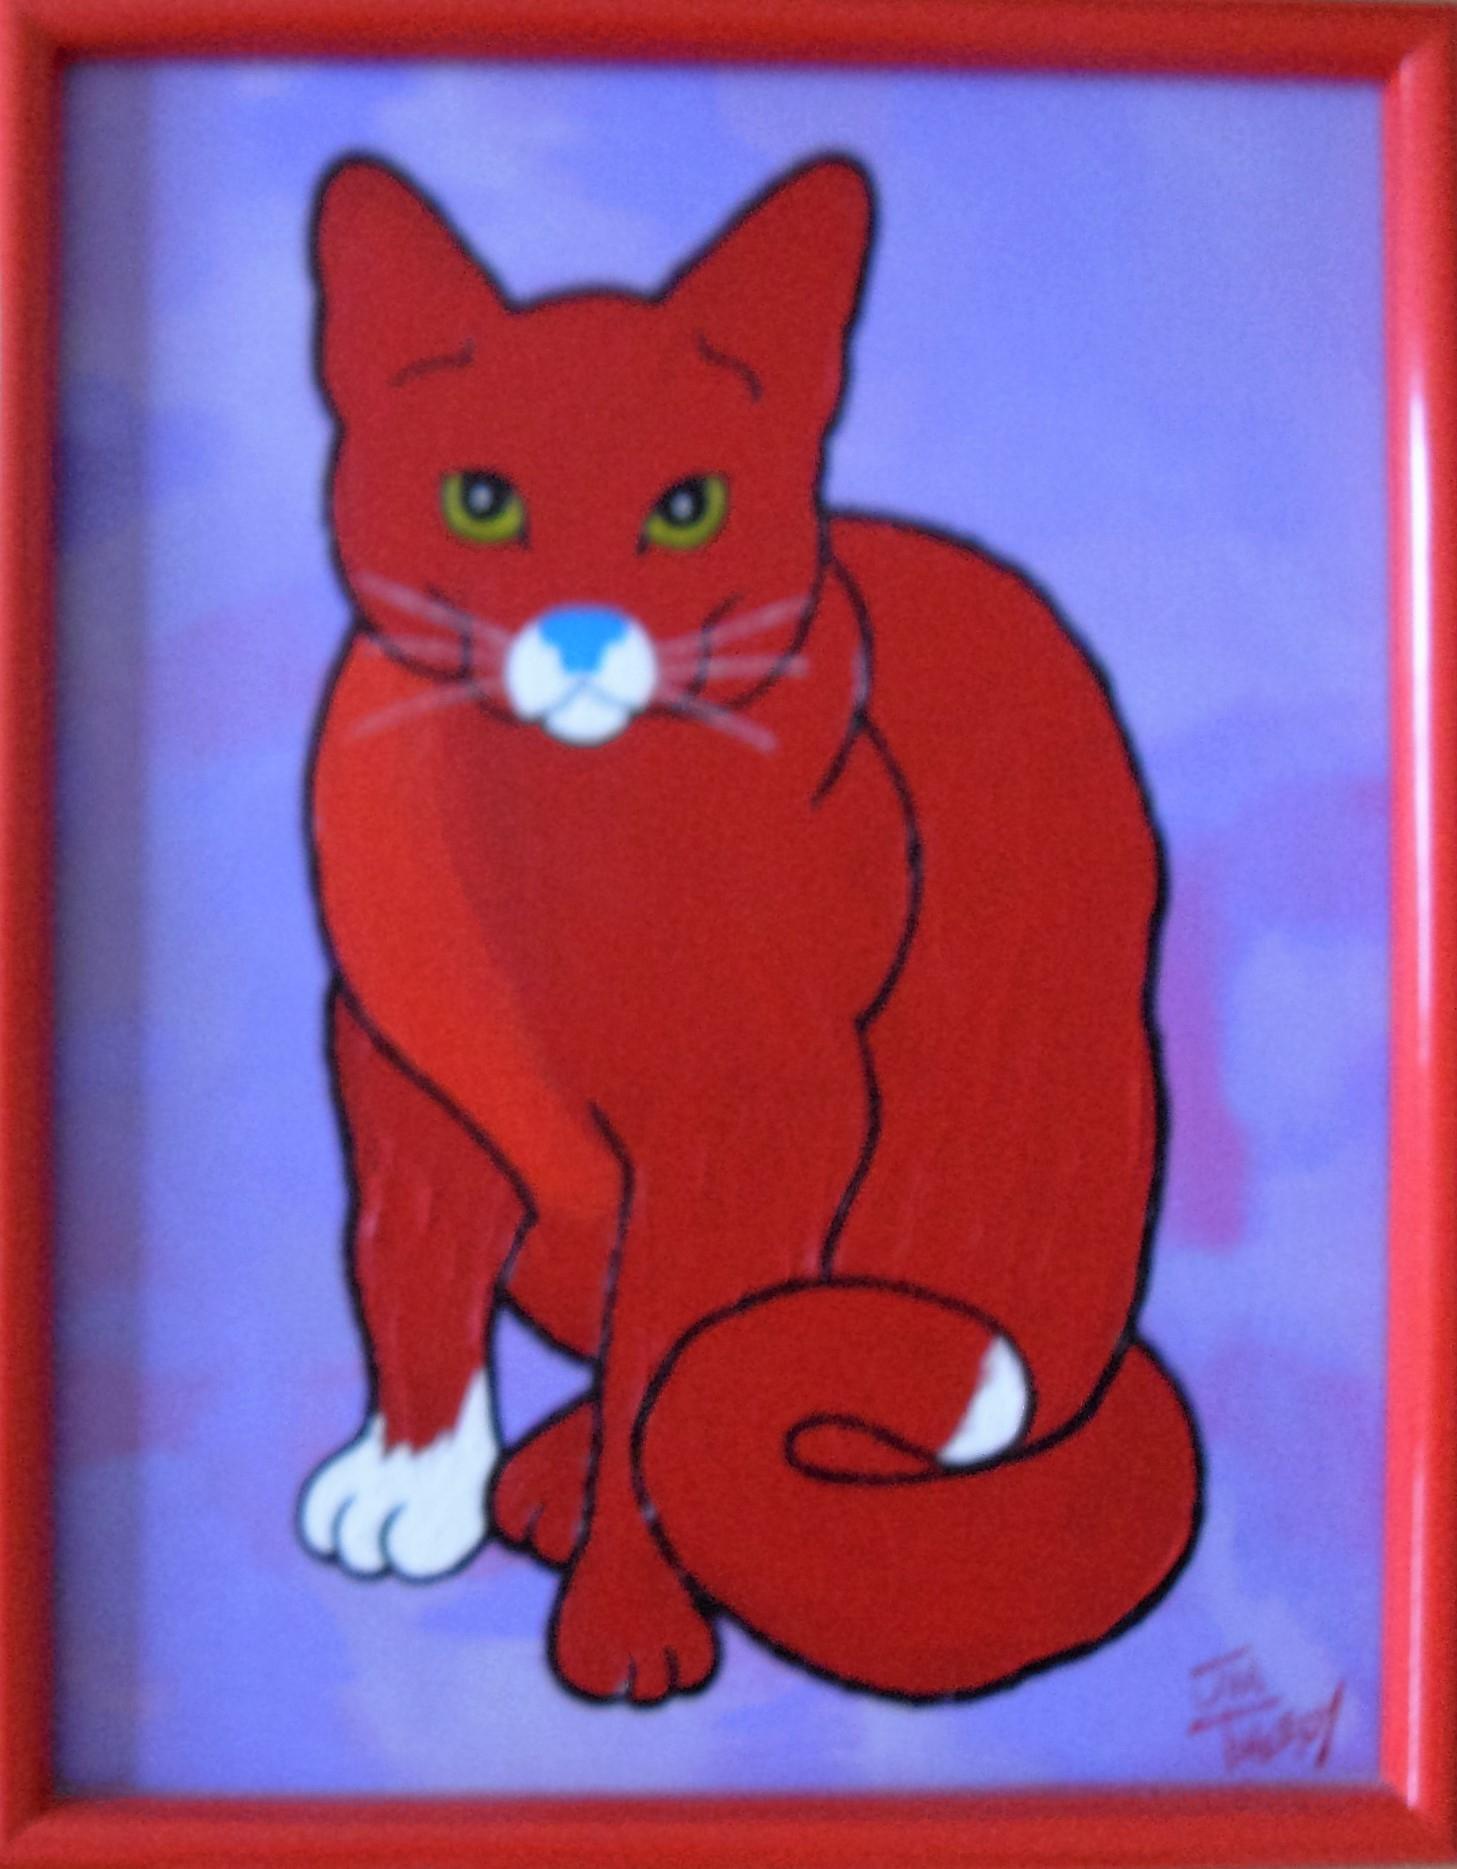 Jim Tweedy, 'PURPLE HAZE', acrylic on canvas, Red Cat series, framed, 35 x 27 cm, signed bottom